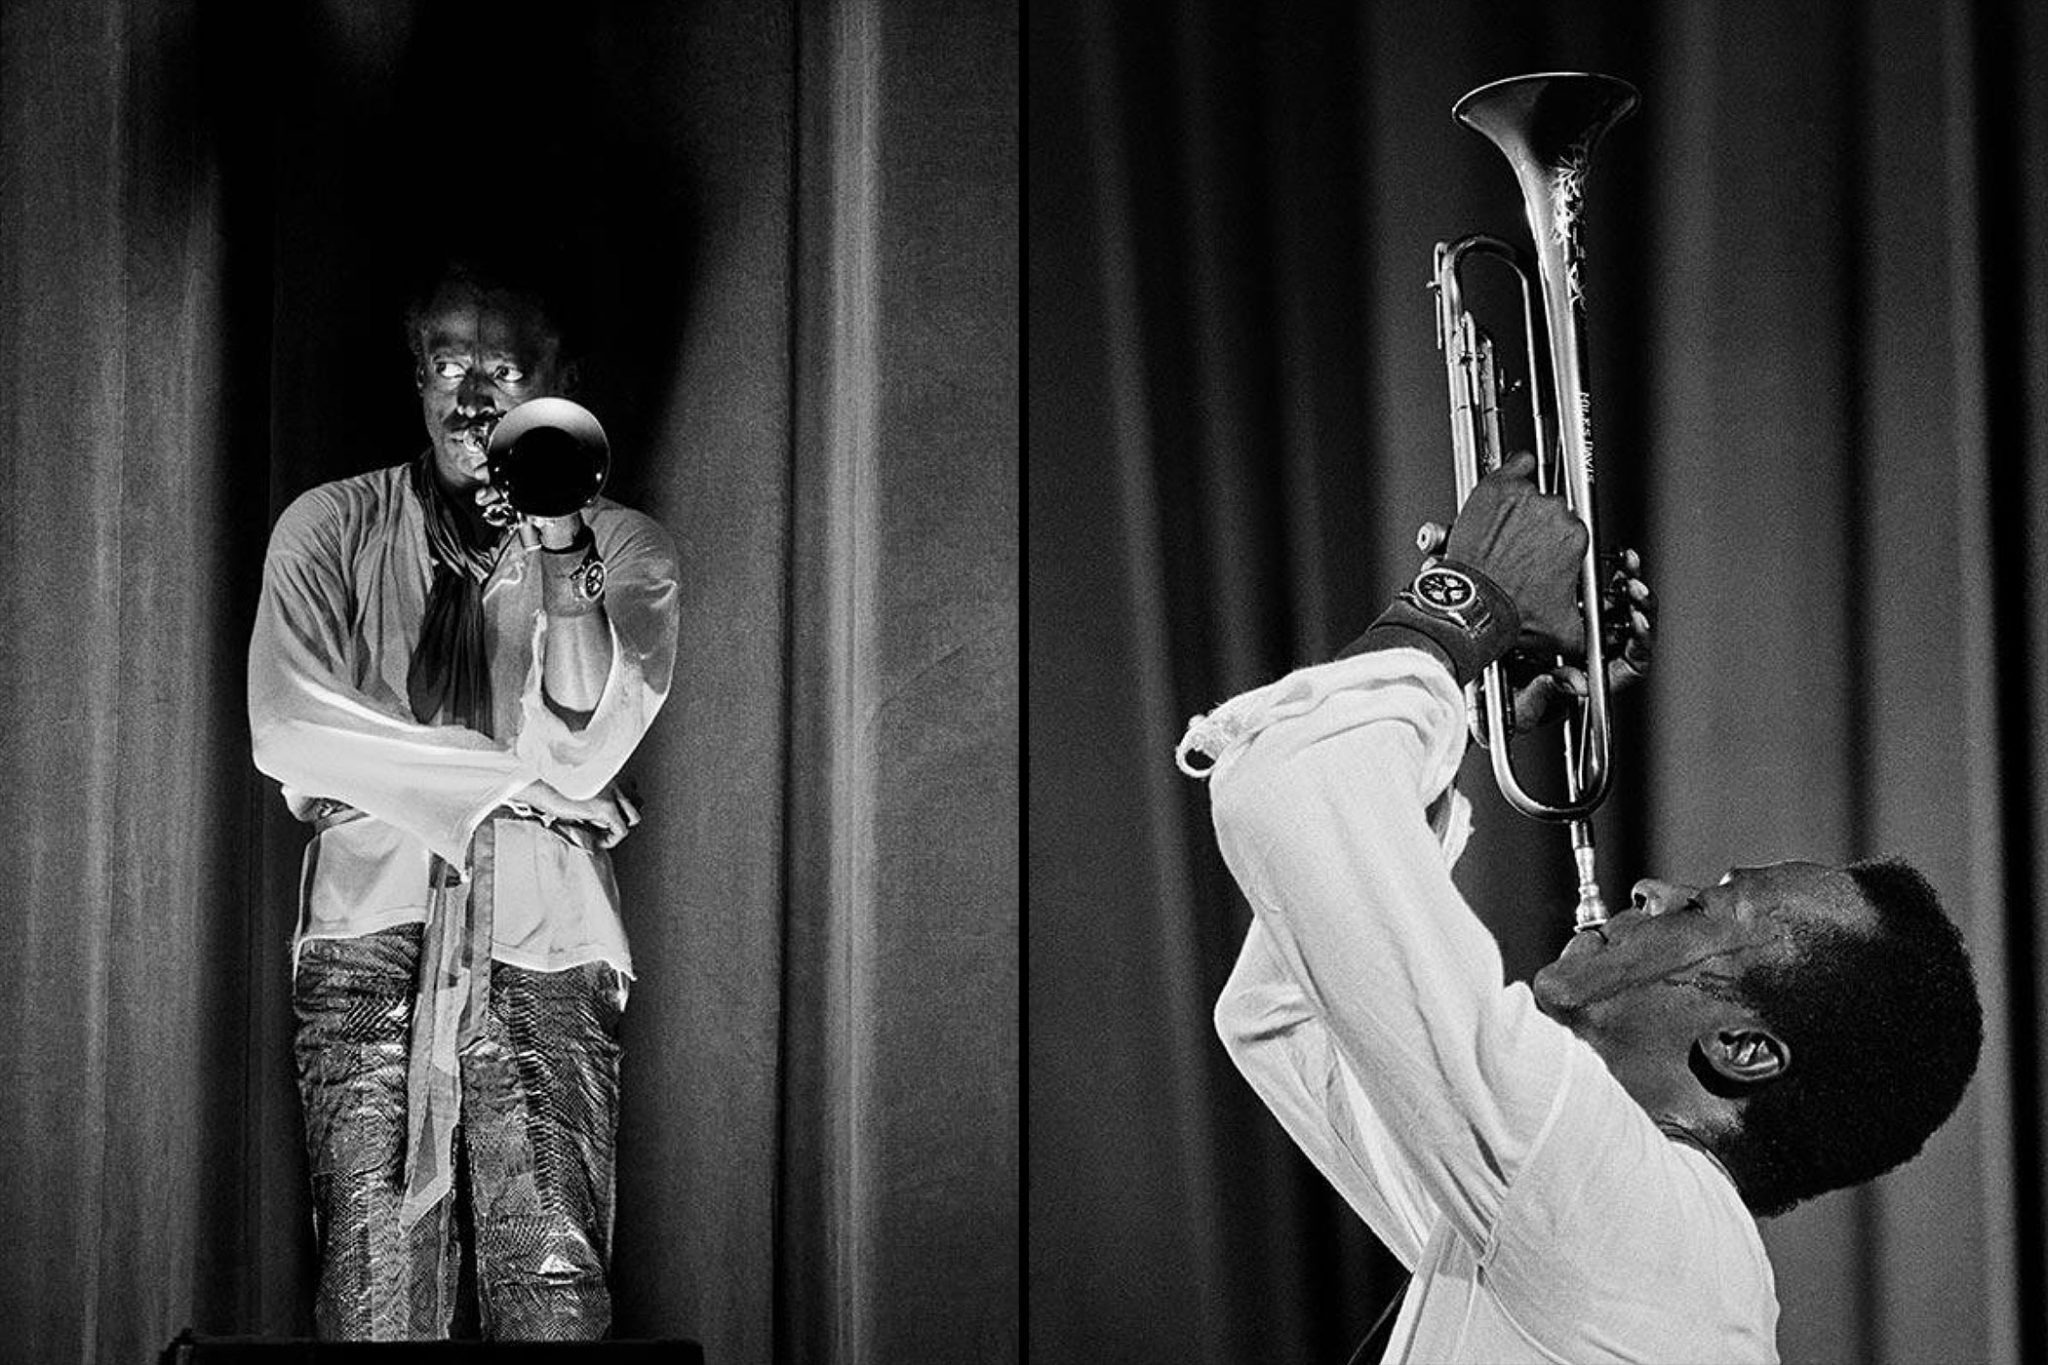 Miles-Davis-mit-seiner-Navitimer-am-Lederarmband-Bund-in-Paris-Frankreich-Nov-1969-Fotocredit-GuyLeQuerrec-MagnumPhotos